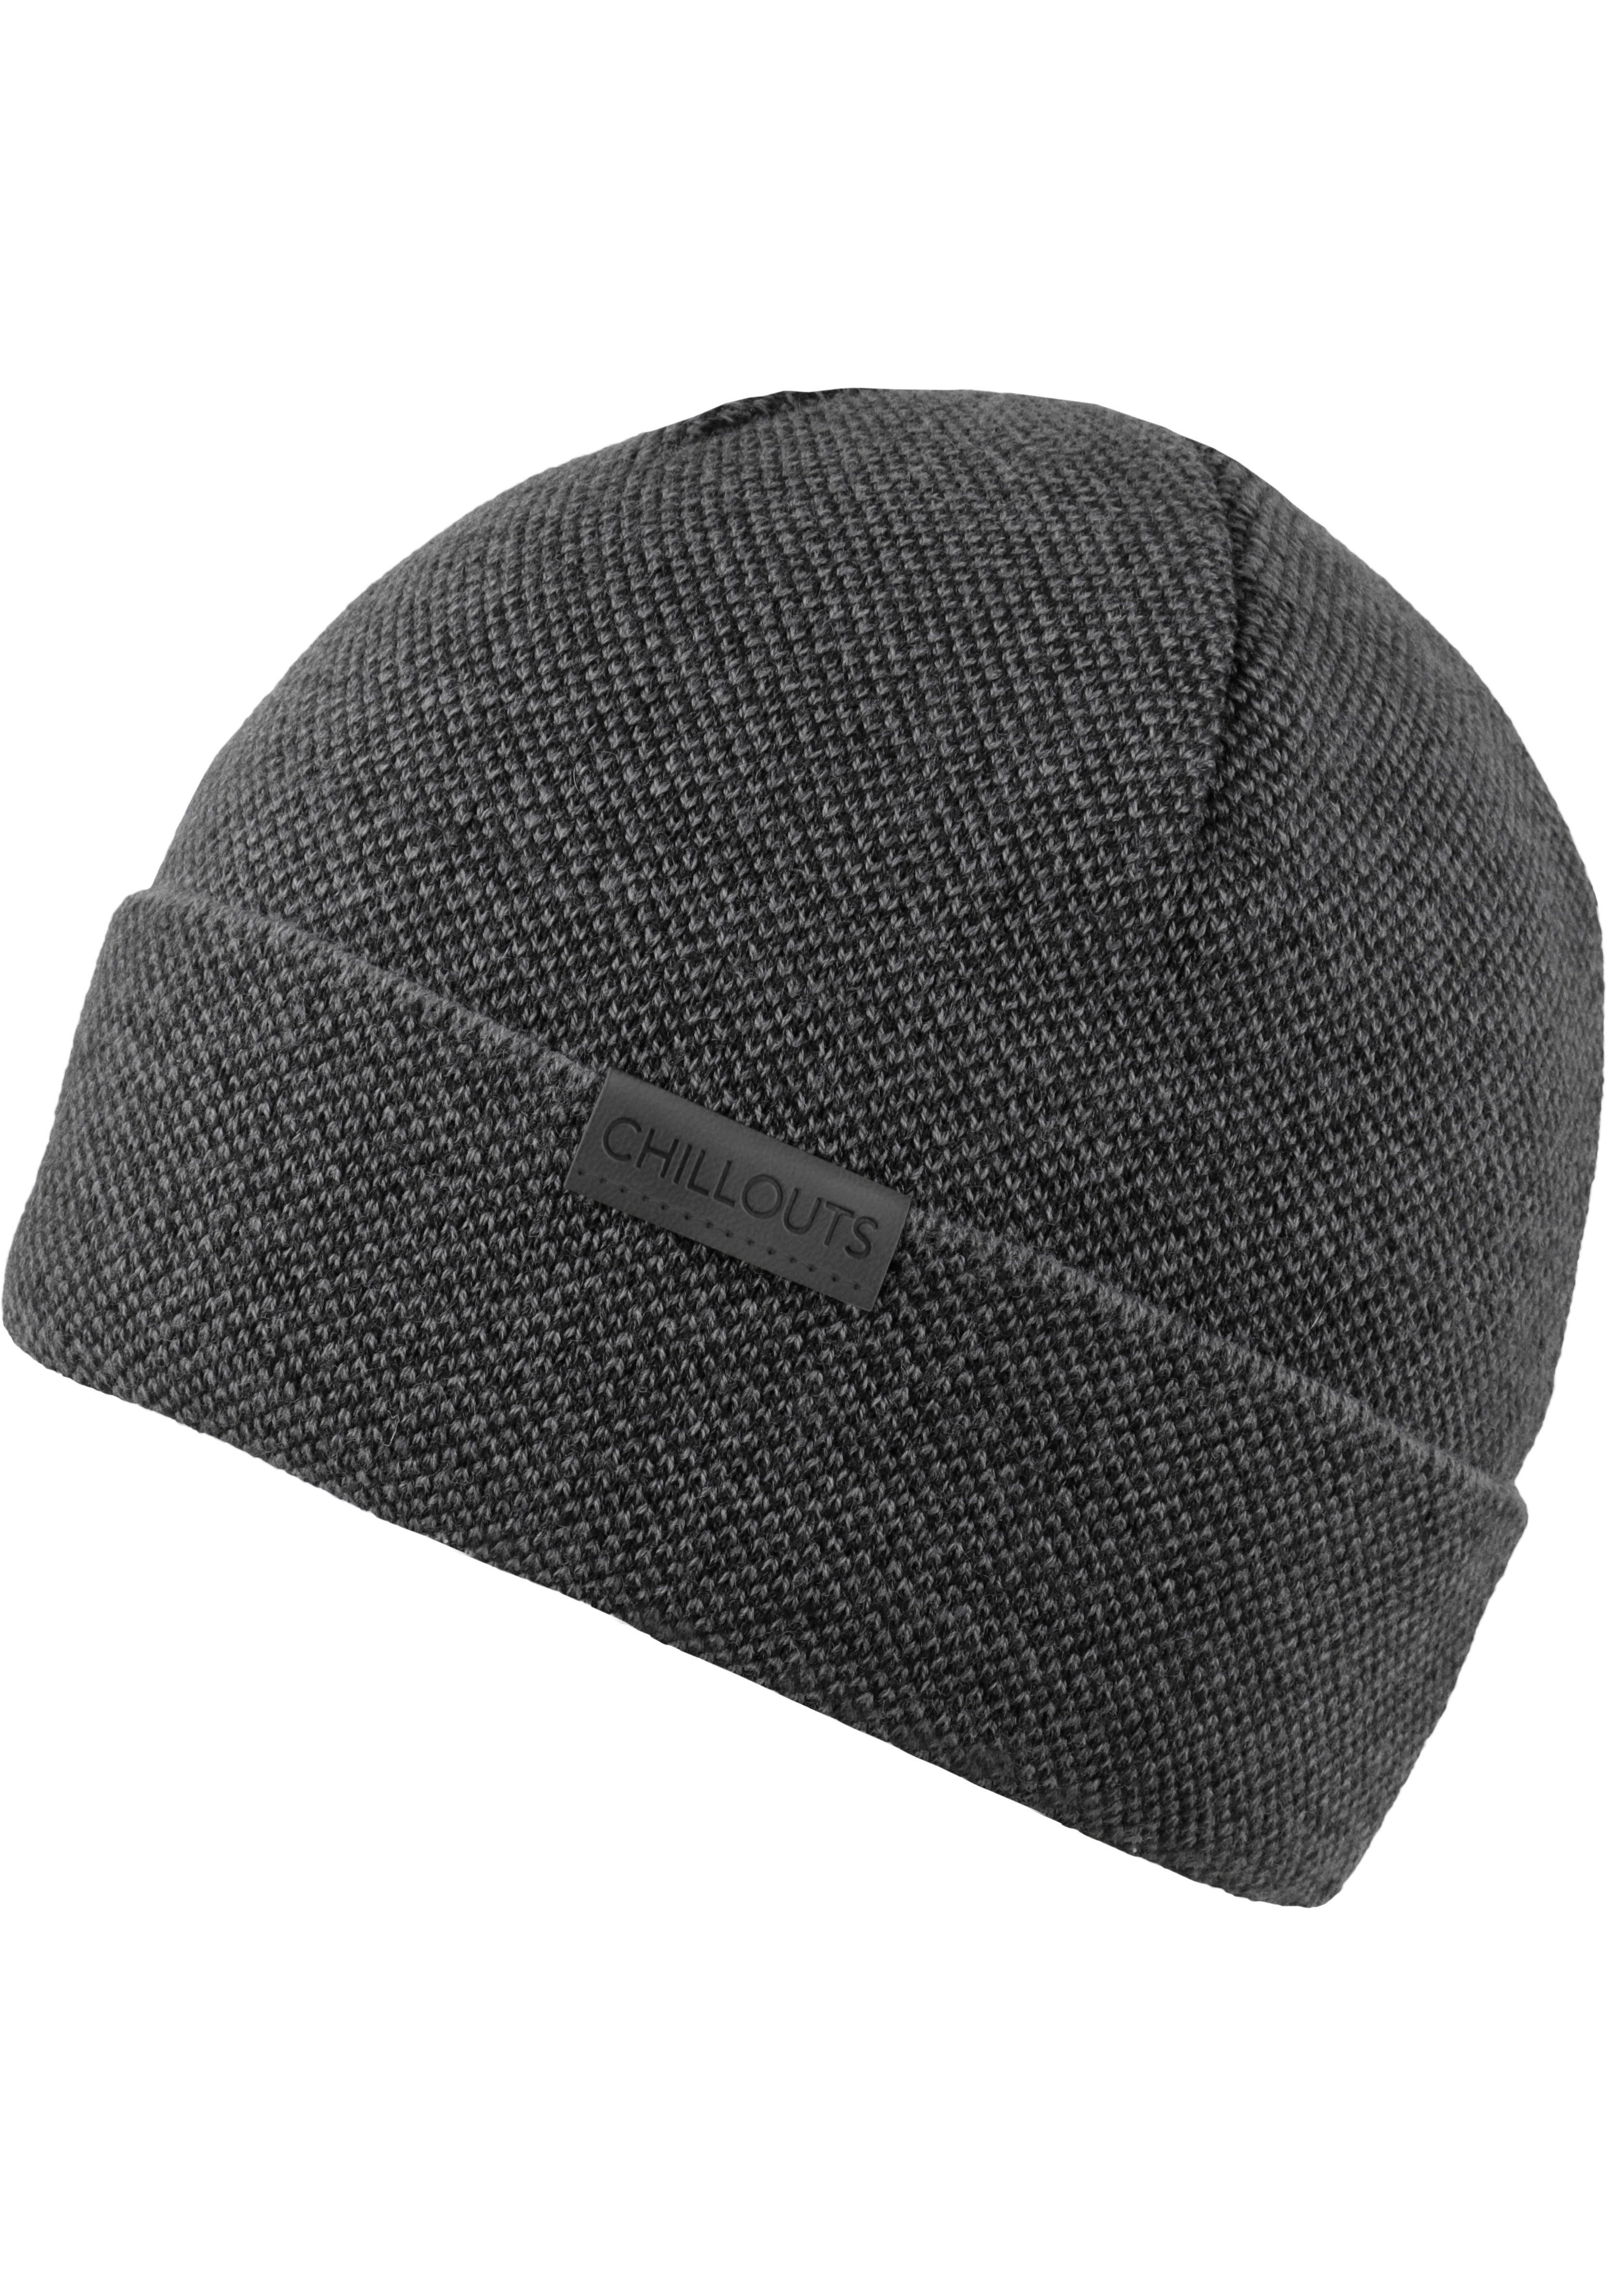 chillouts Strickmütze Kilian grey Hat dark